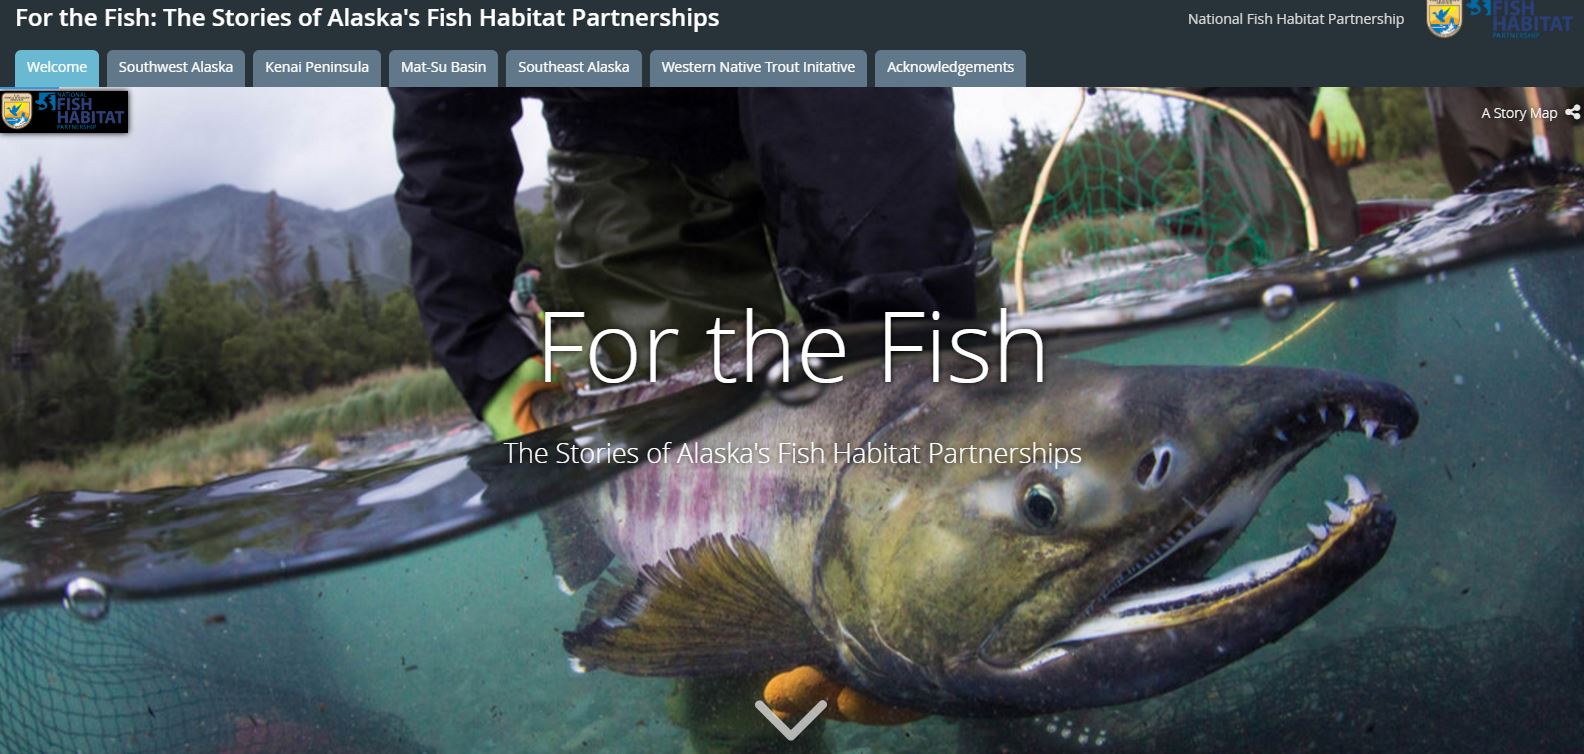 Alaska Fish Habitat Partnerships Story Map